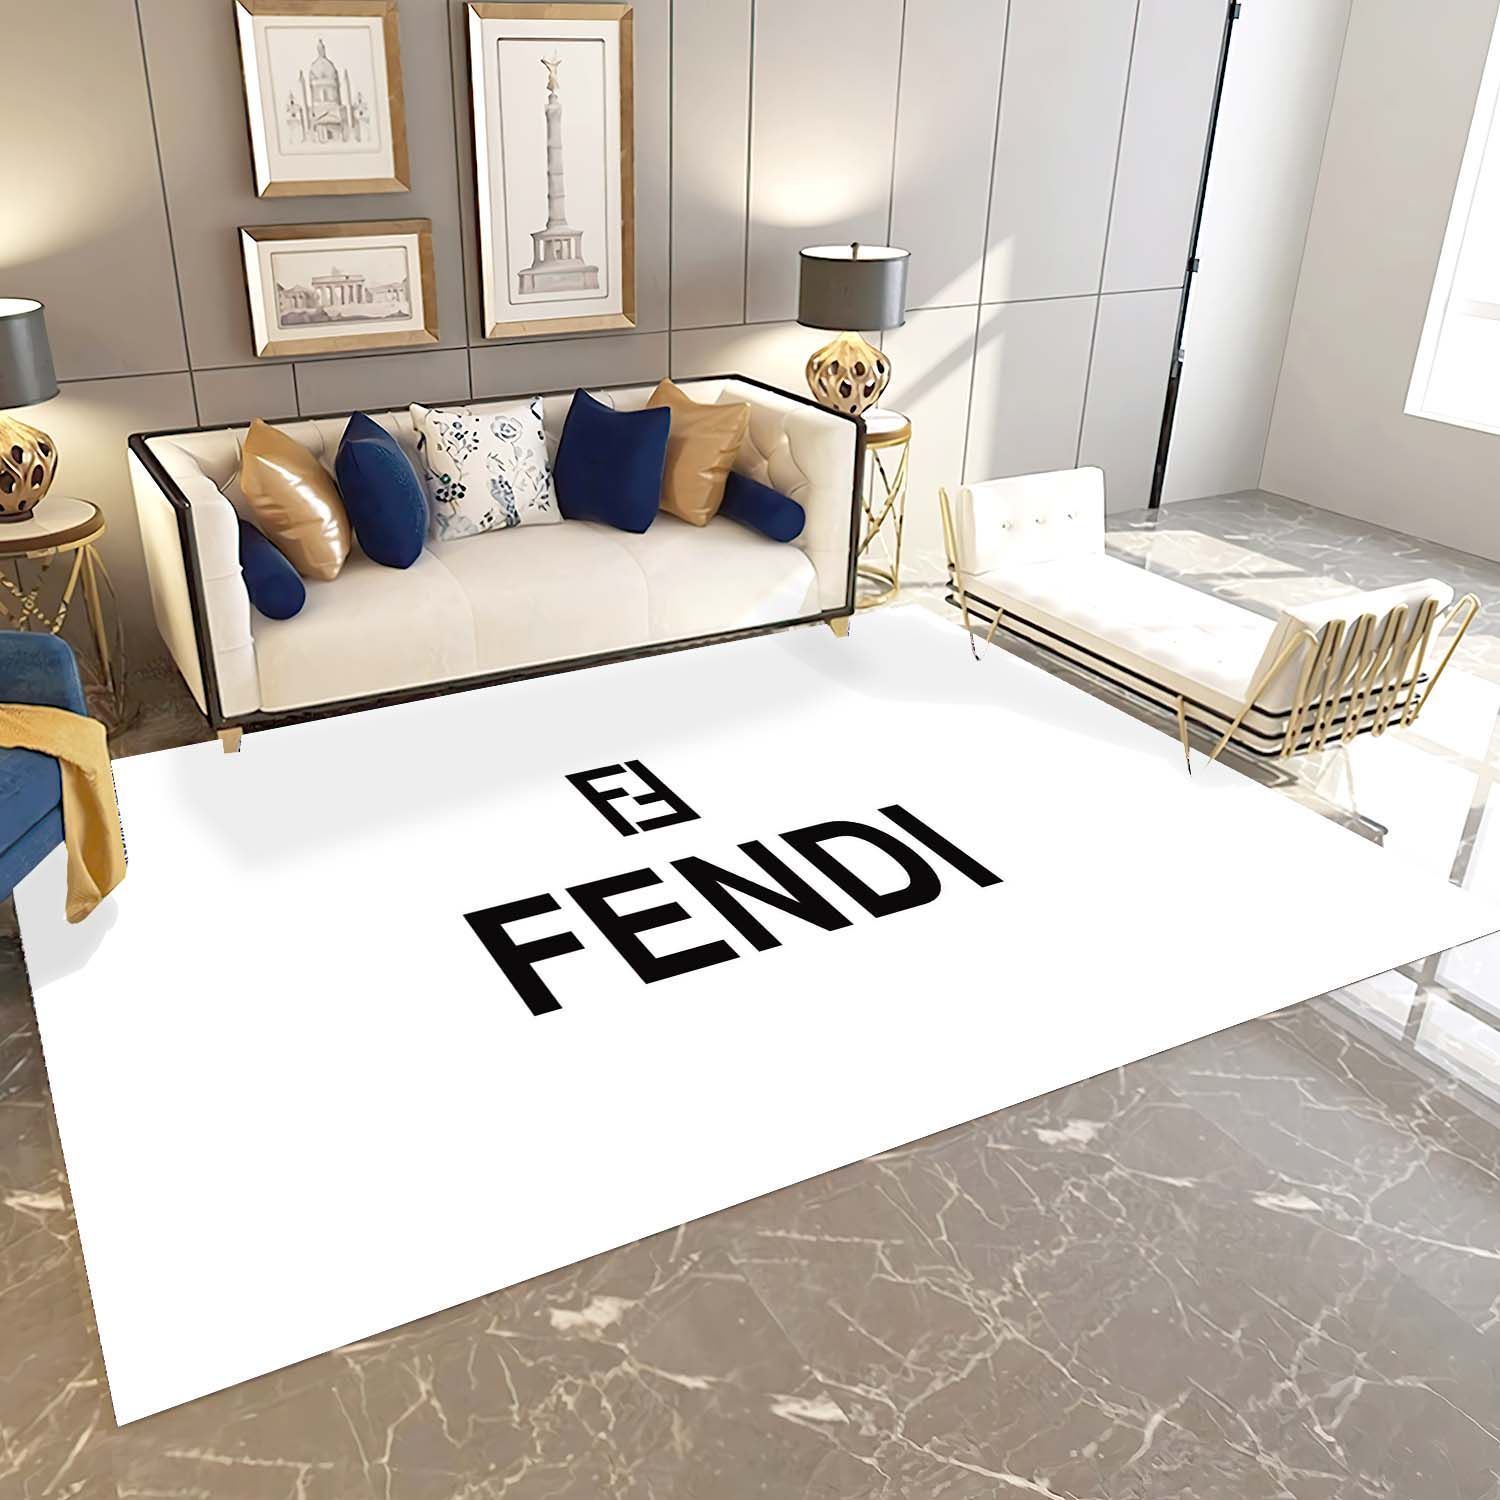 Fendi Logo Area Rugs, Hypebeast Living Room Bedroom Carpet, Fashion Brand Floor Decor